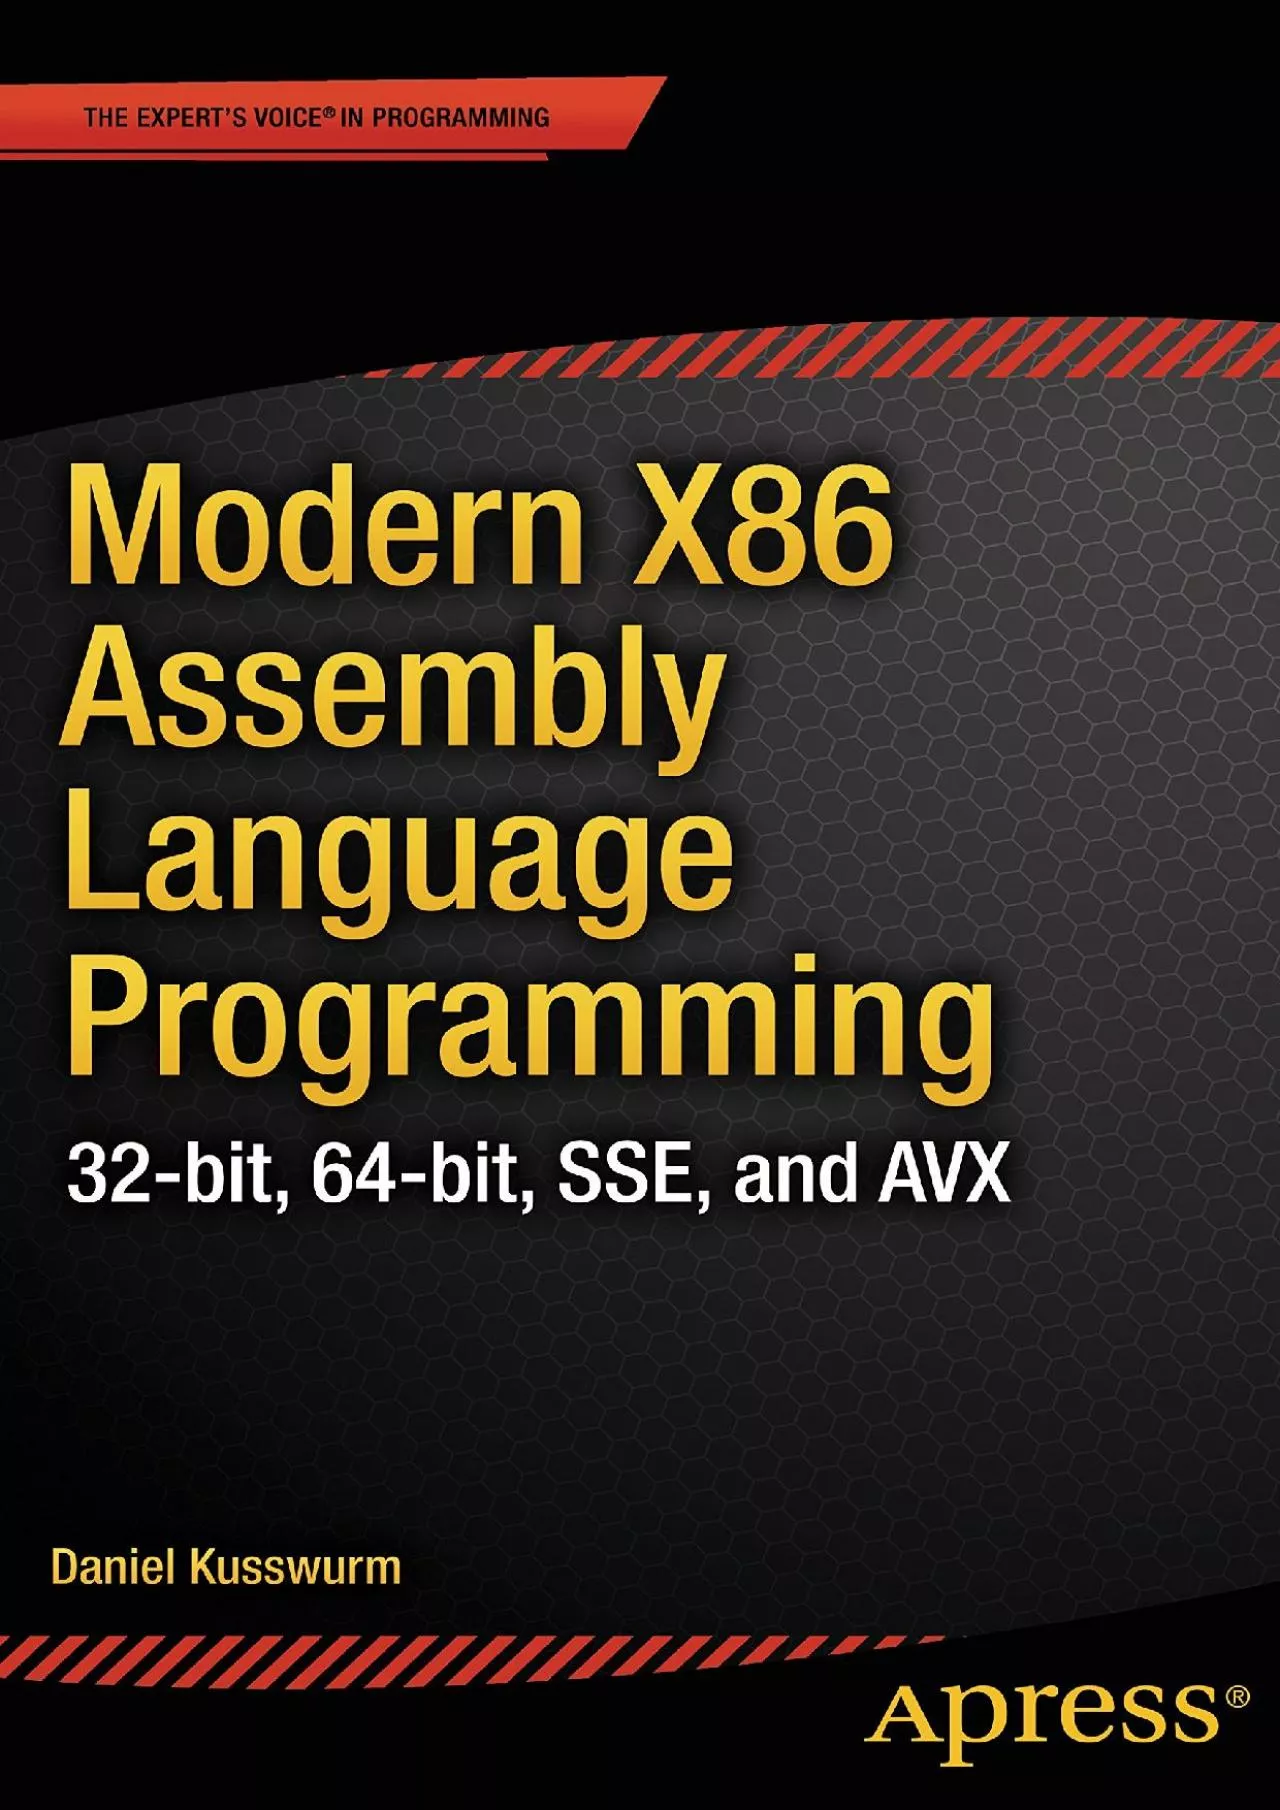 [READ]-Modern X86 Assembly Language Programming: 32-bit, 64-bit, SSE, and AVX